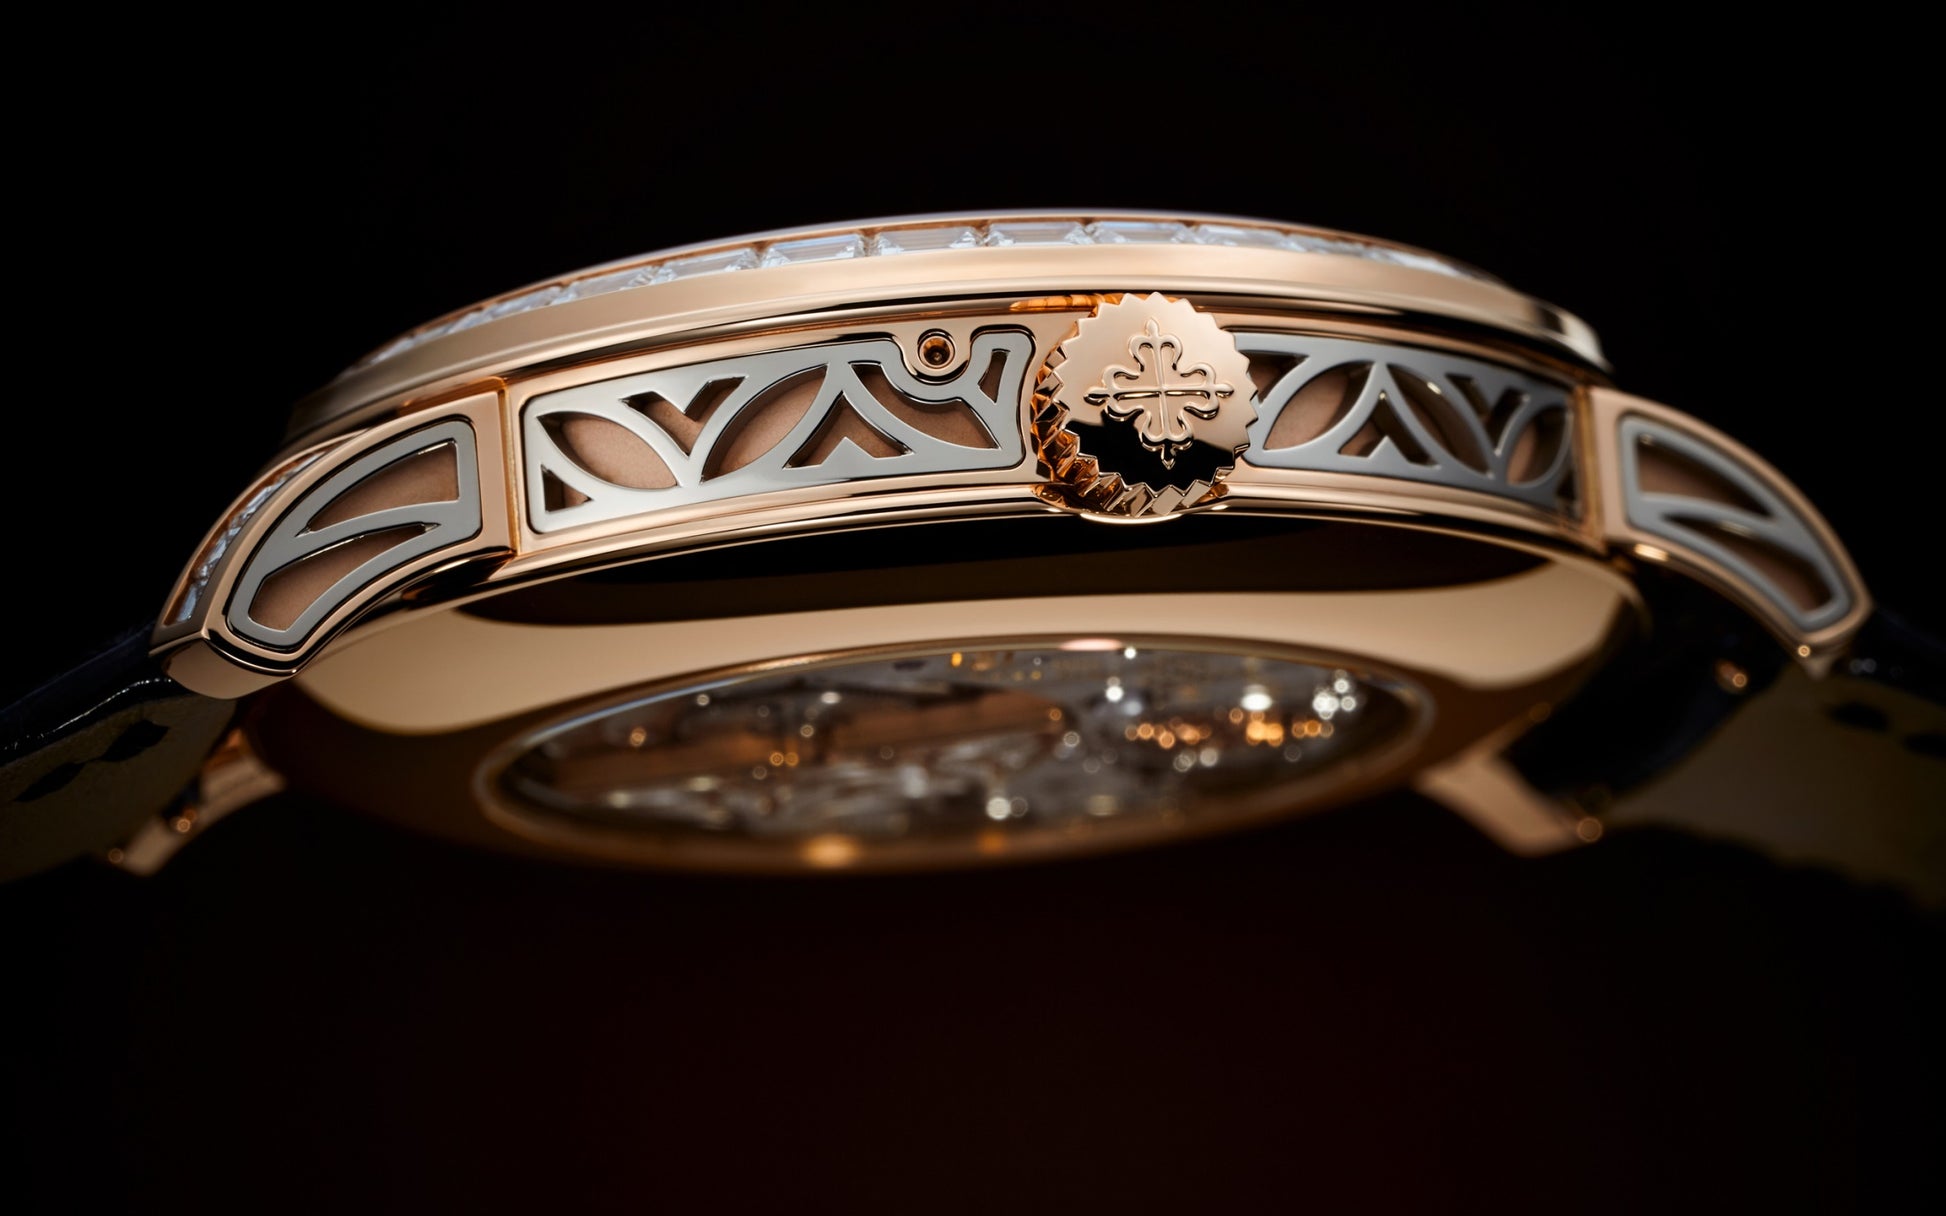 Patek Philippe Grand Complication, 18k Rose Gold set with baguette diamonds, 43mm, Ref# 5304/301R-001, Crown